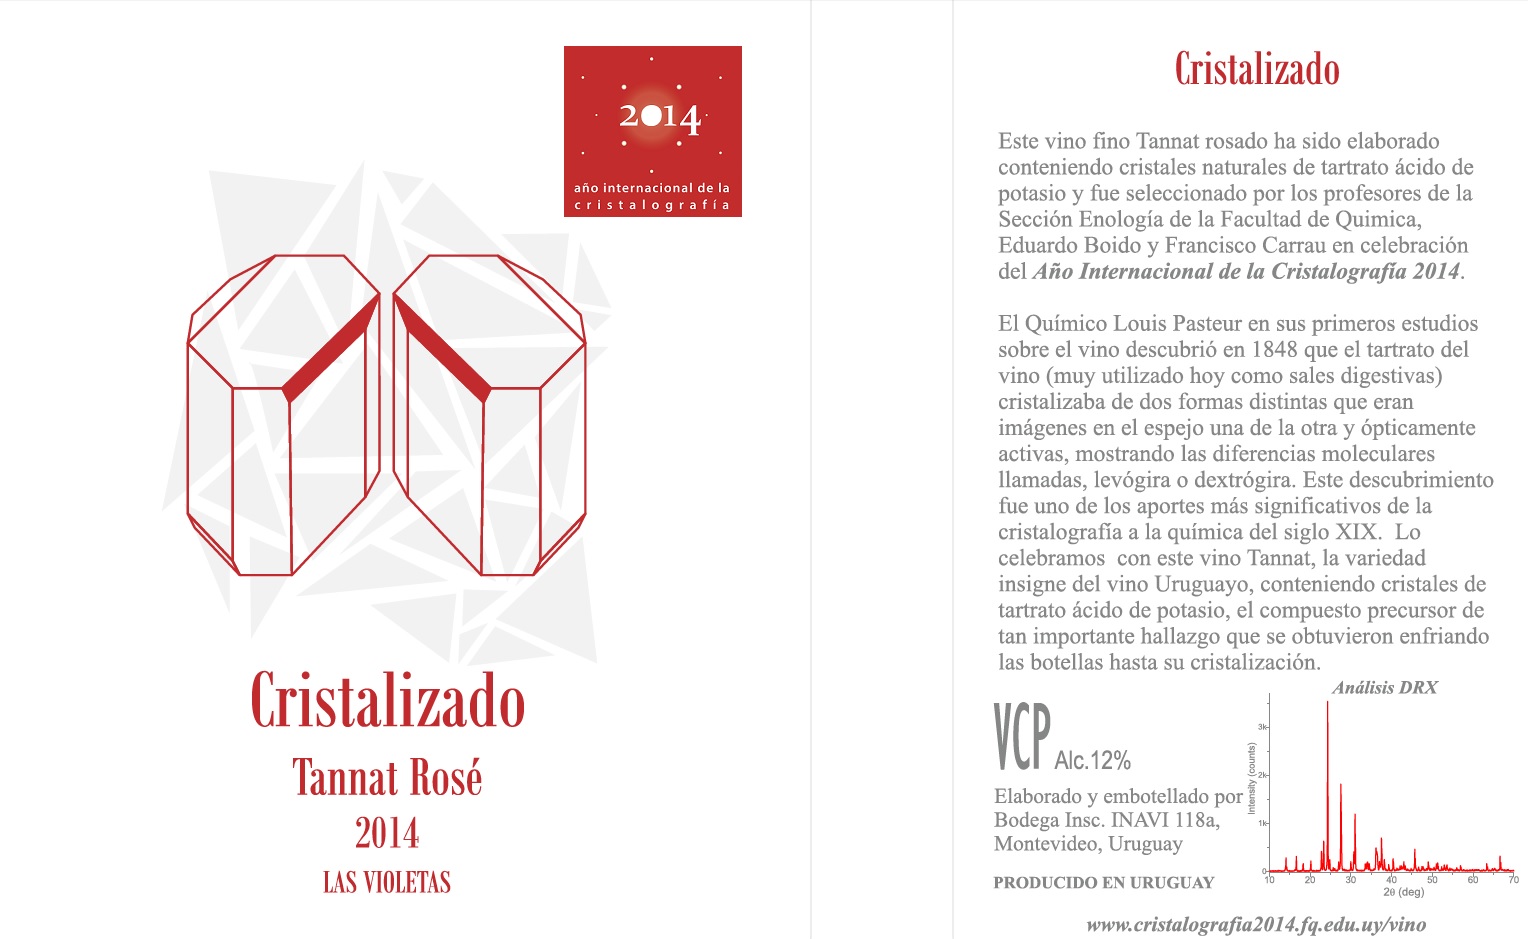 label of Cristalizado